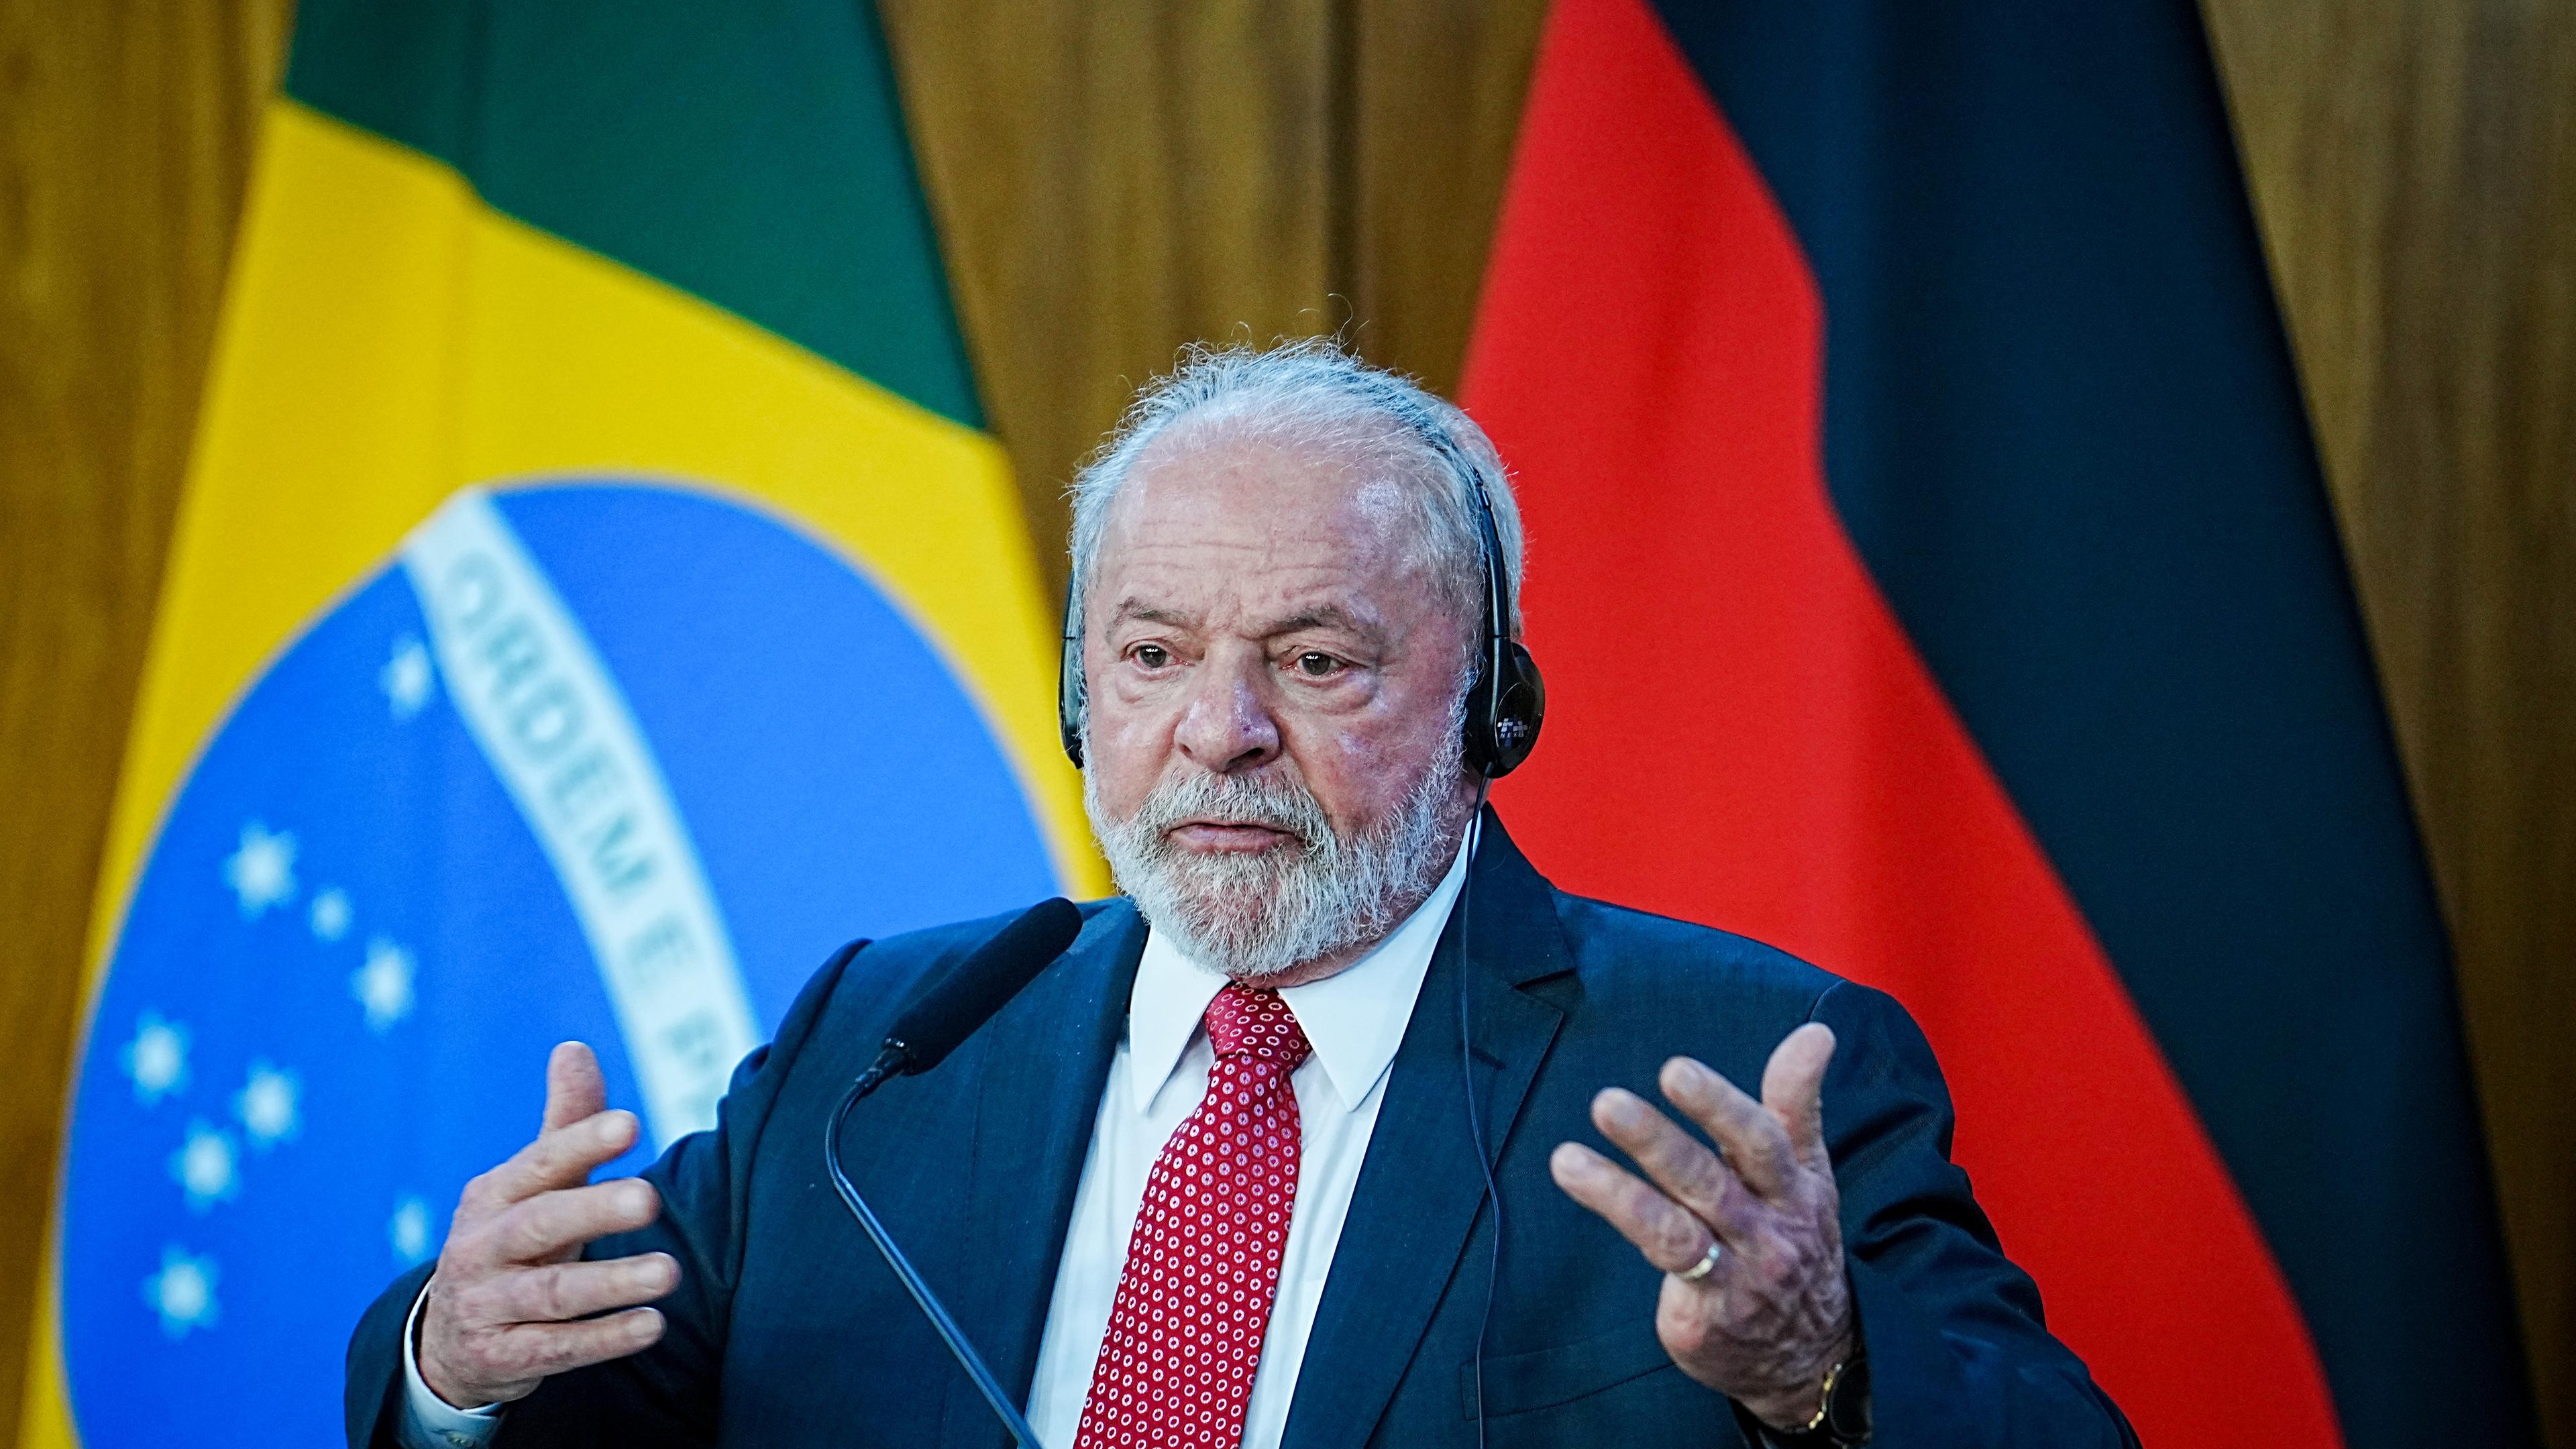 Brasilia, 30.01.2023: Brasiliens Präsident Lula da Silva gibt eine Pressekonferenz.